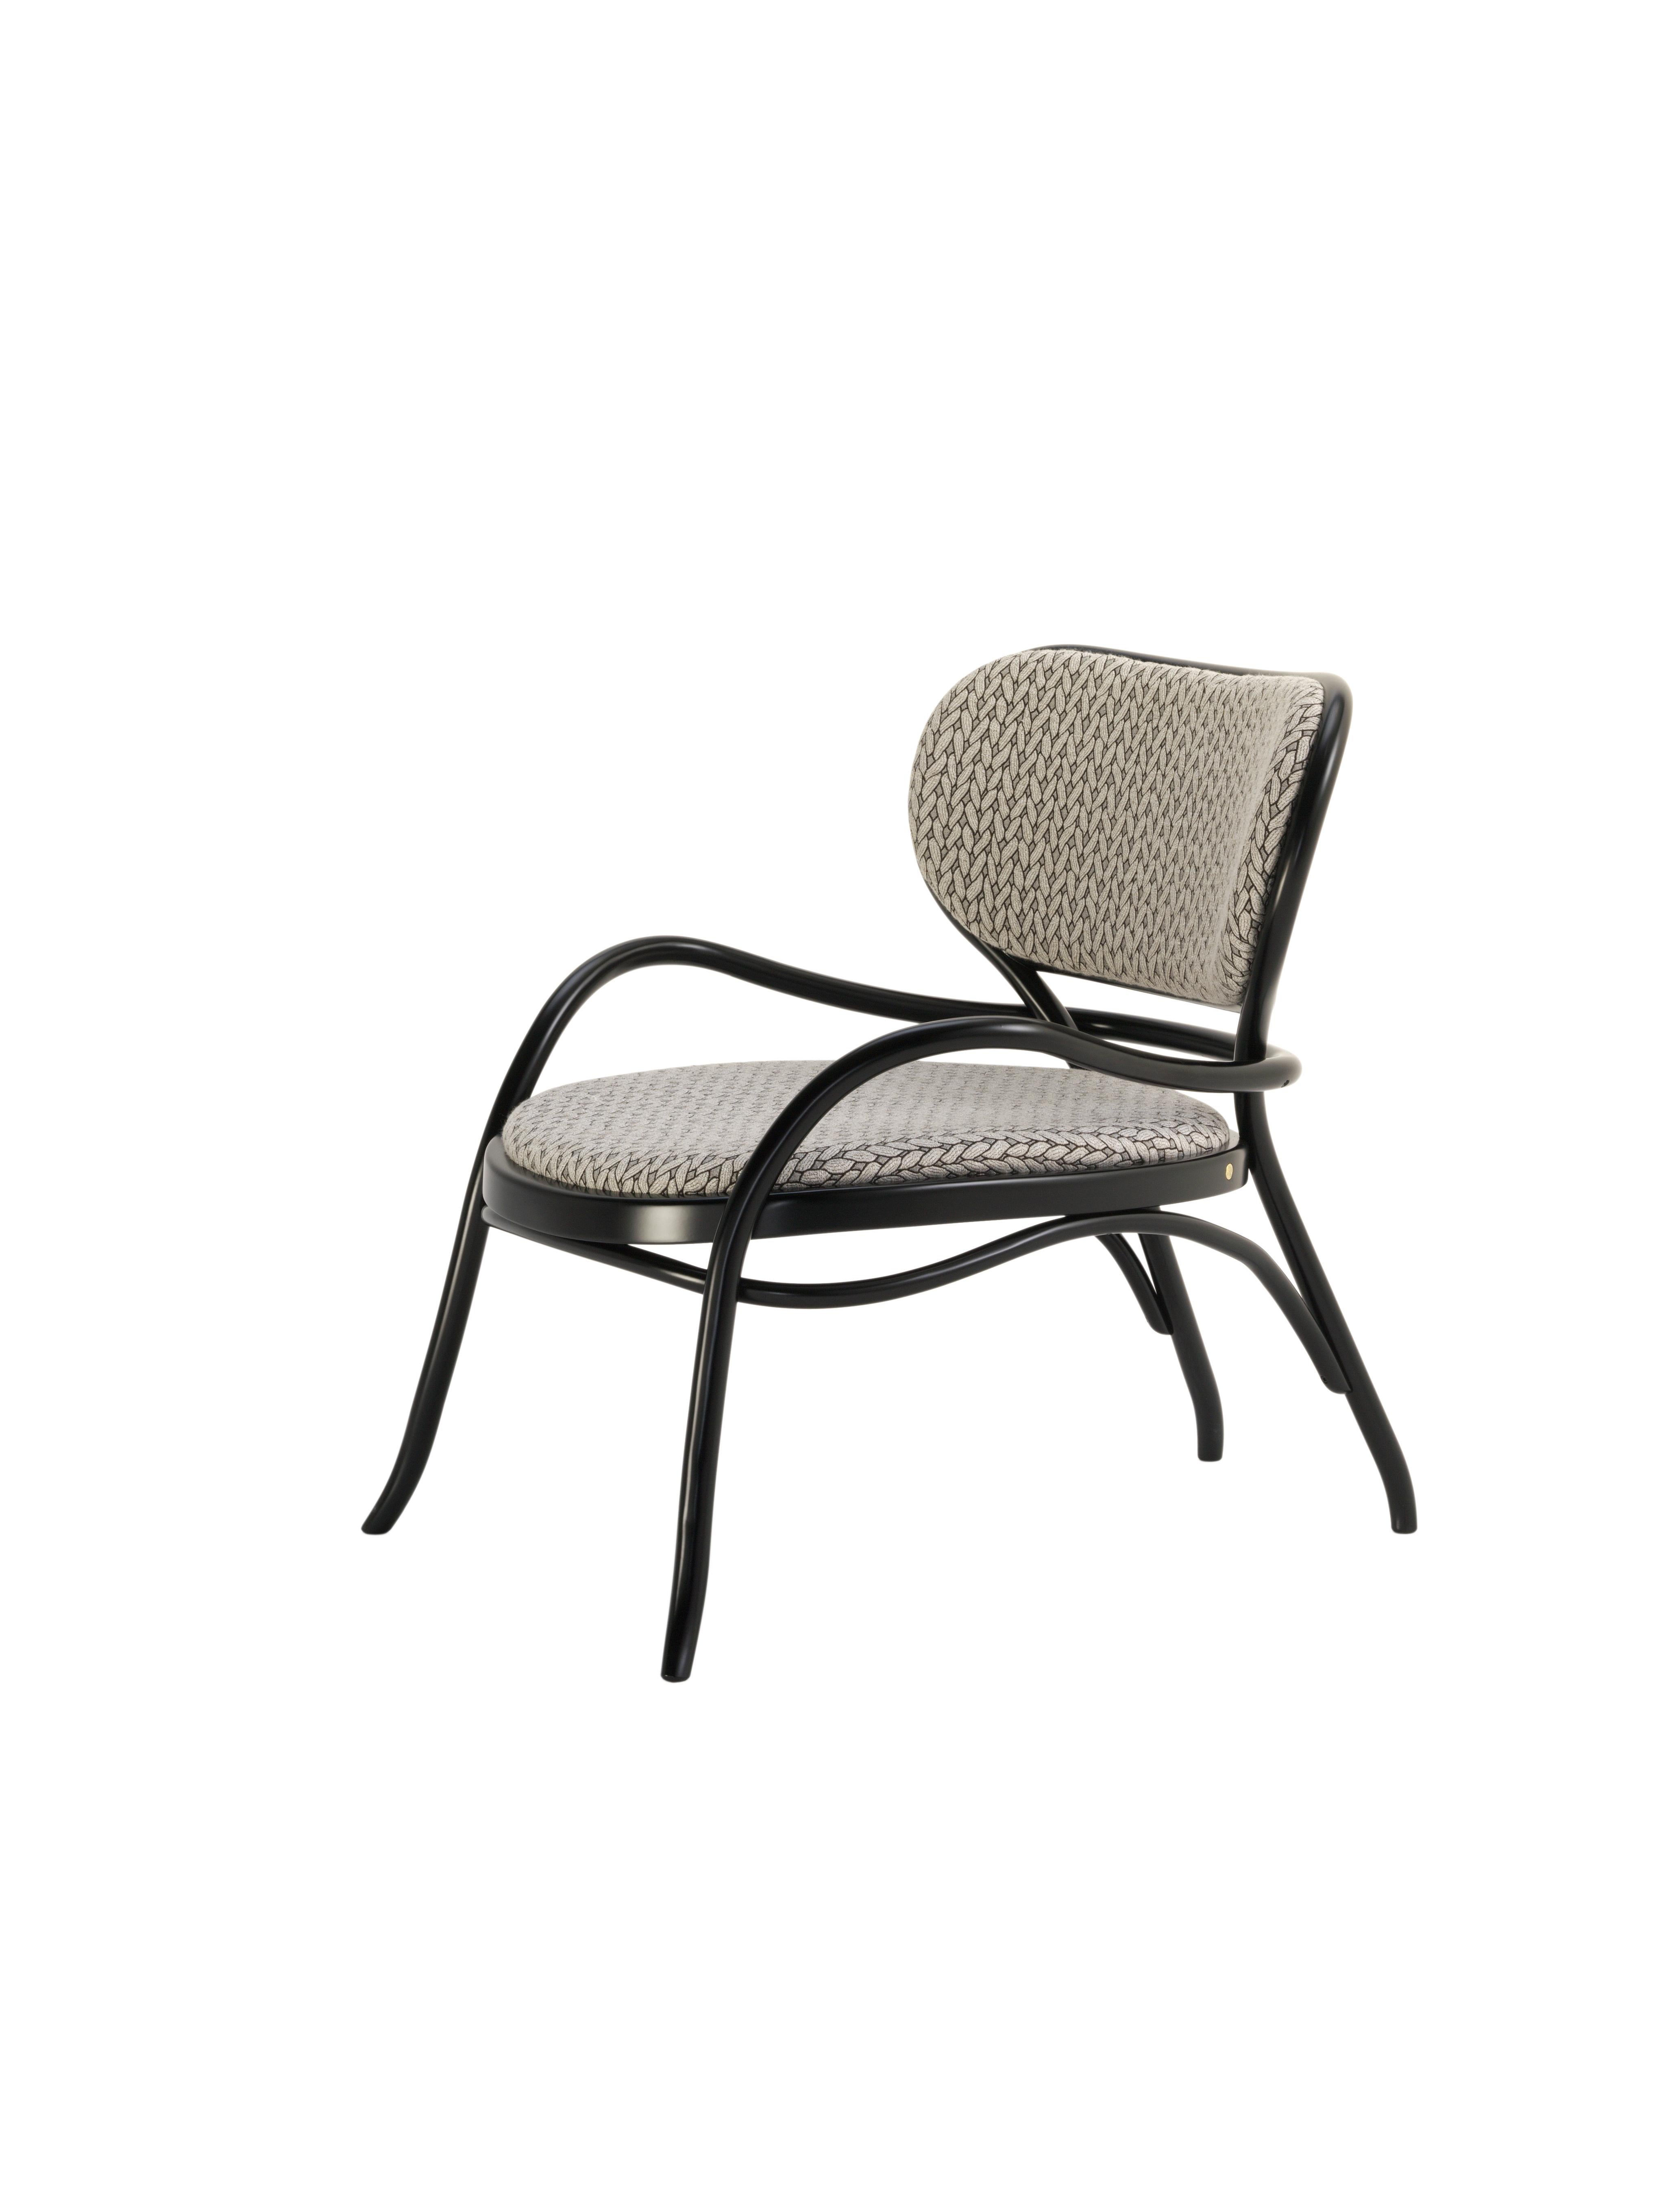 Gebrüder Thonet Vienna GmbH Lehnstuhl Lounge Chair with Upholstered Seat For Sale 1